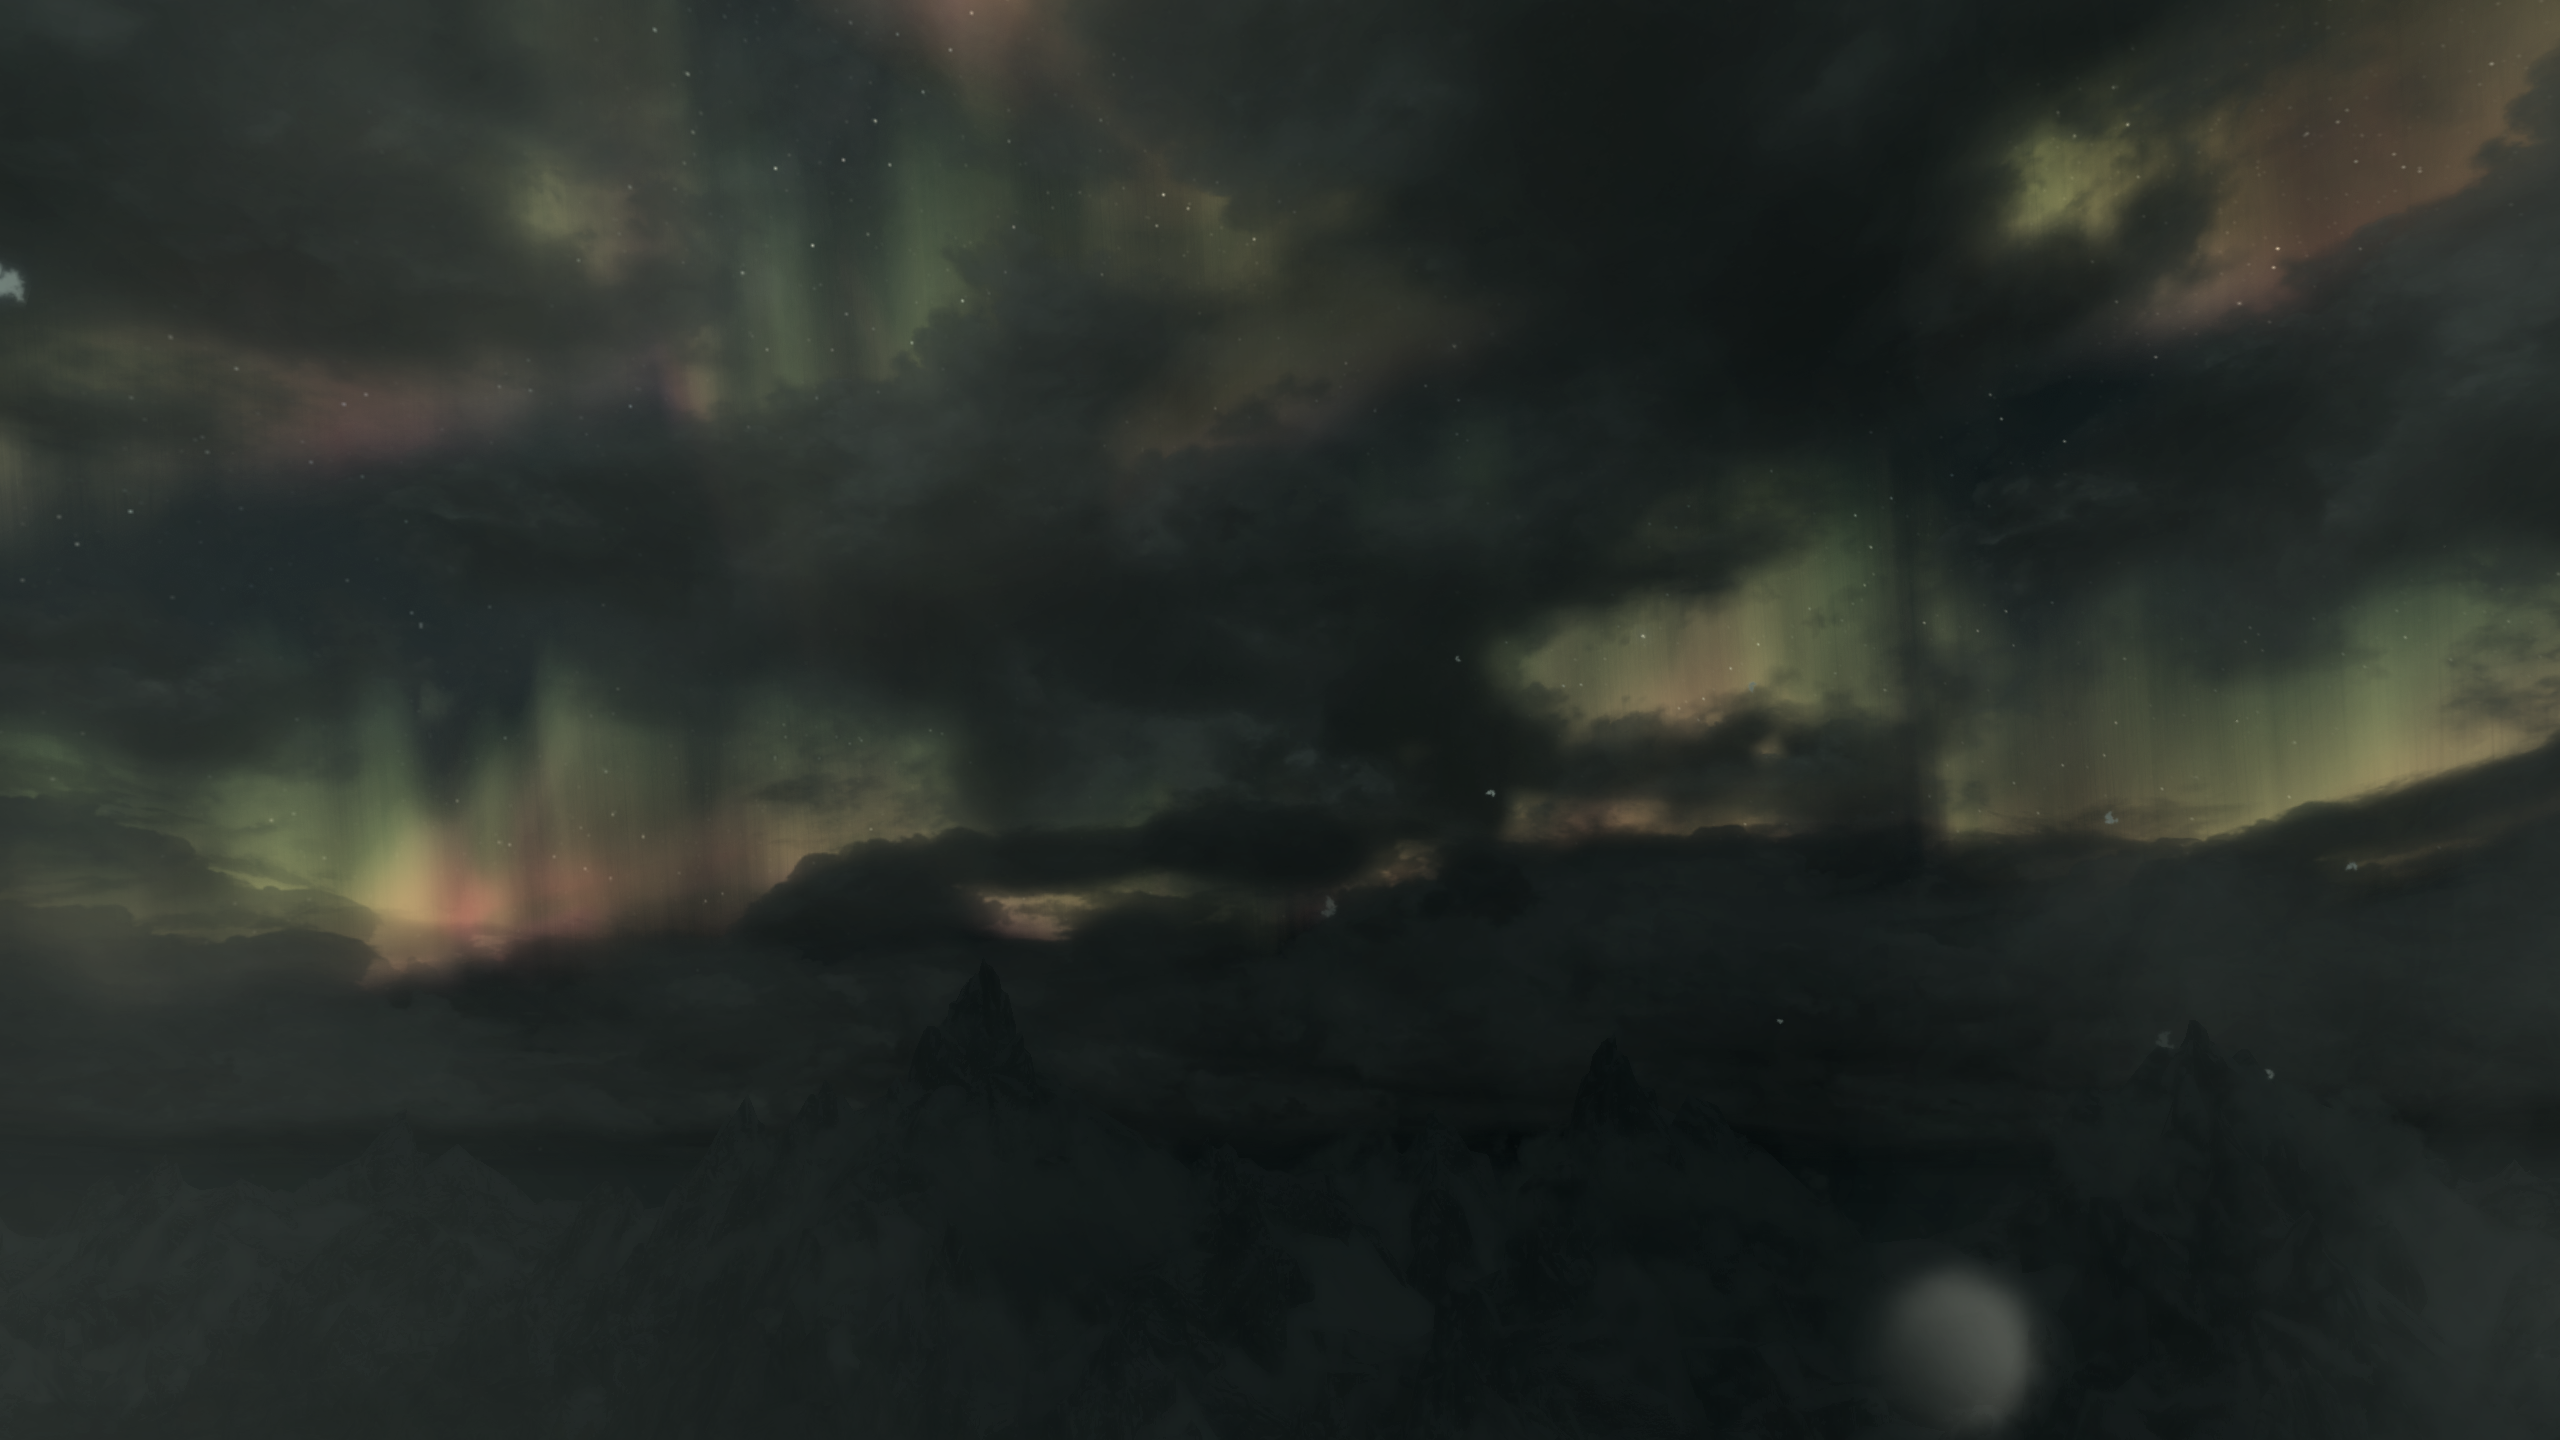 General 2560x1440 The Elder Scrolls V: Skyrim aurorae landscape clouds video games RPG screen shot PC gaming